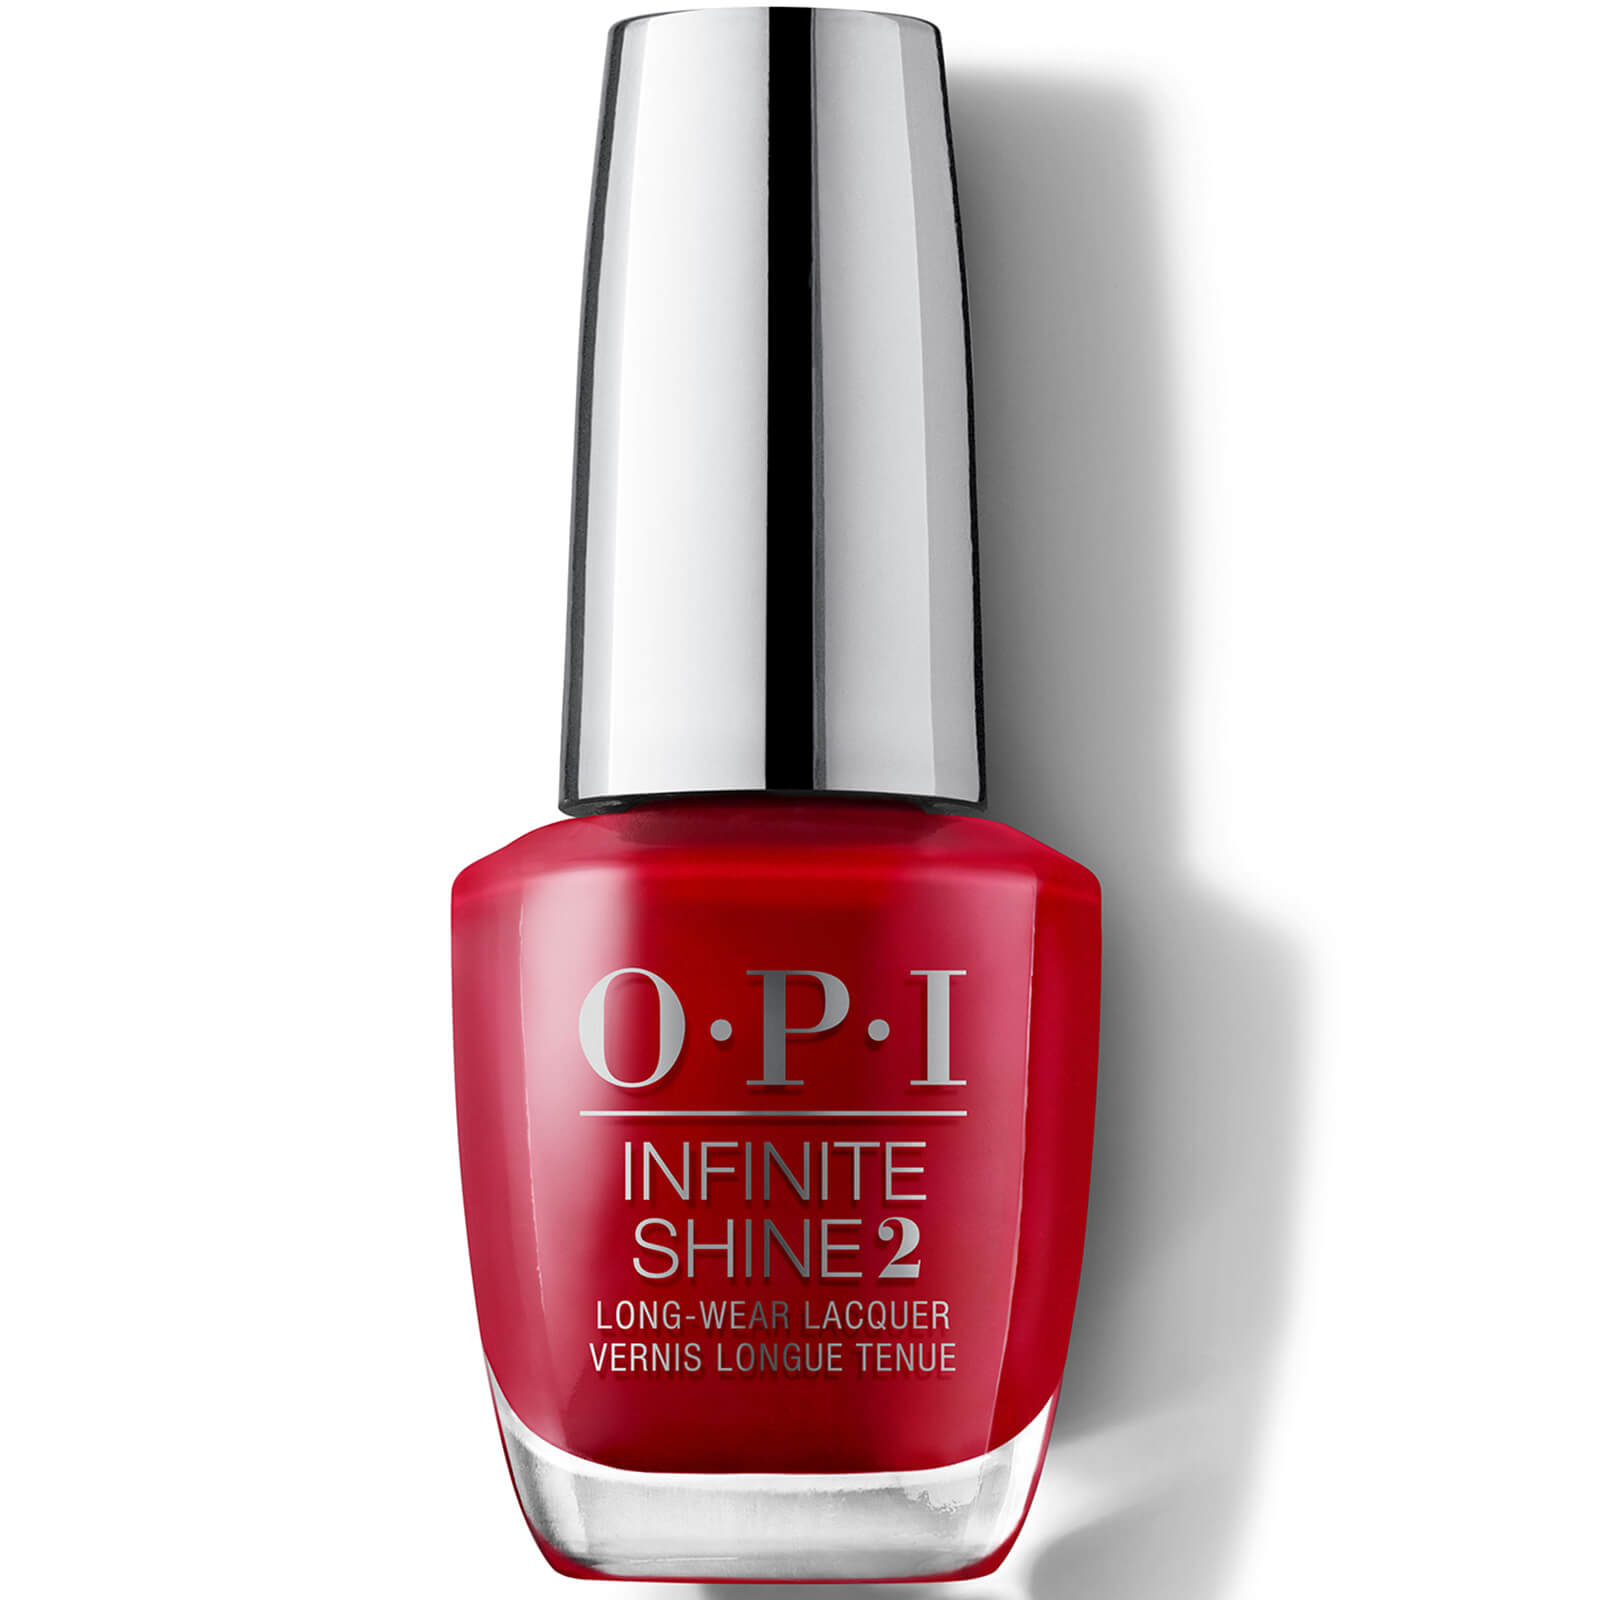 Opi Infinite Shine Long-wear Nail Polish (various Shades) - Big Apple Red In Big Apple Red        